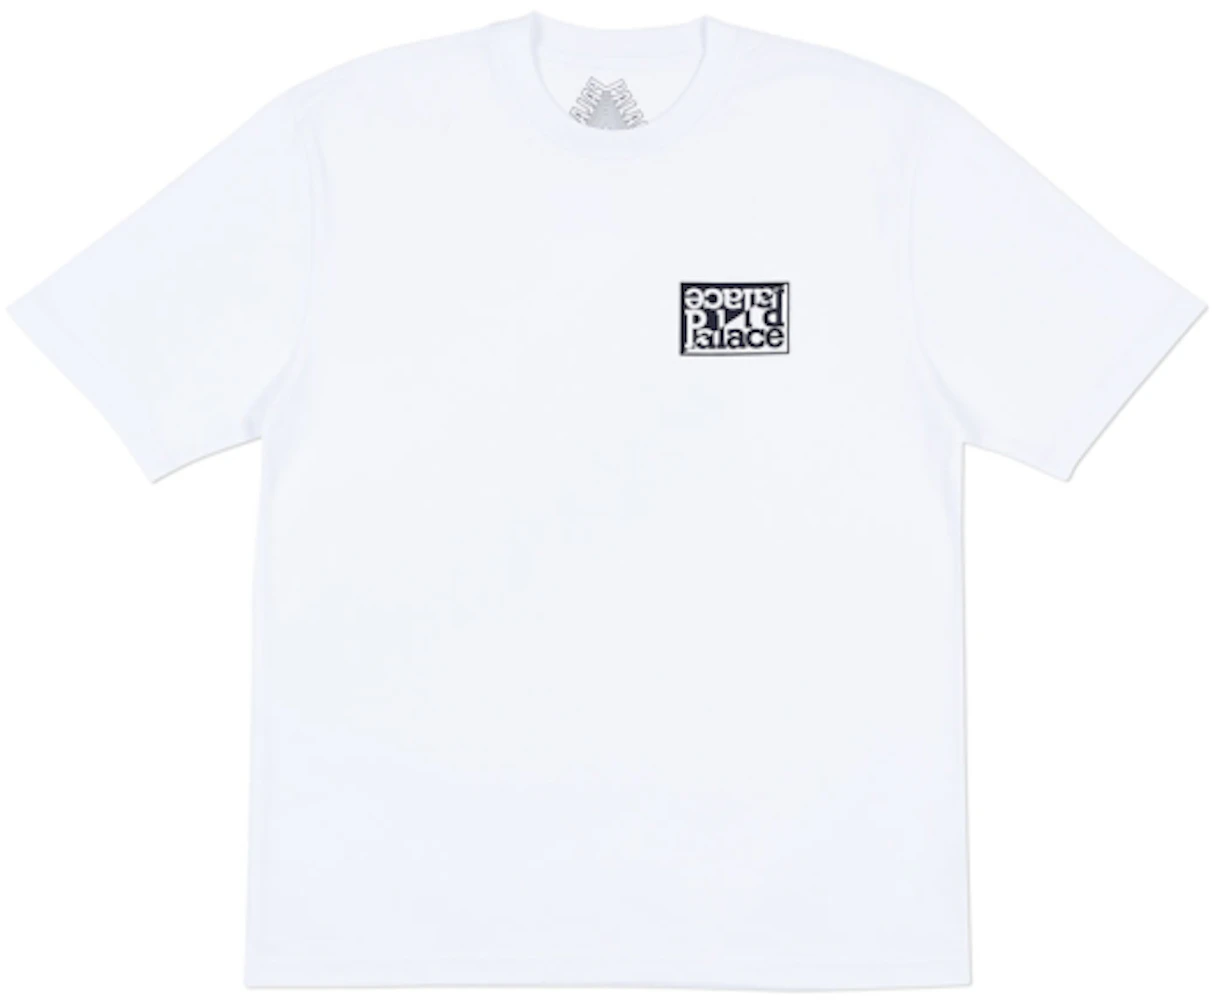 Palace Split T-Shirt White/Black - Spring 2018 - US